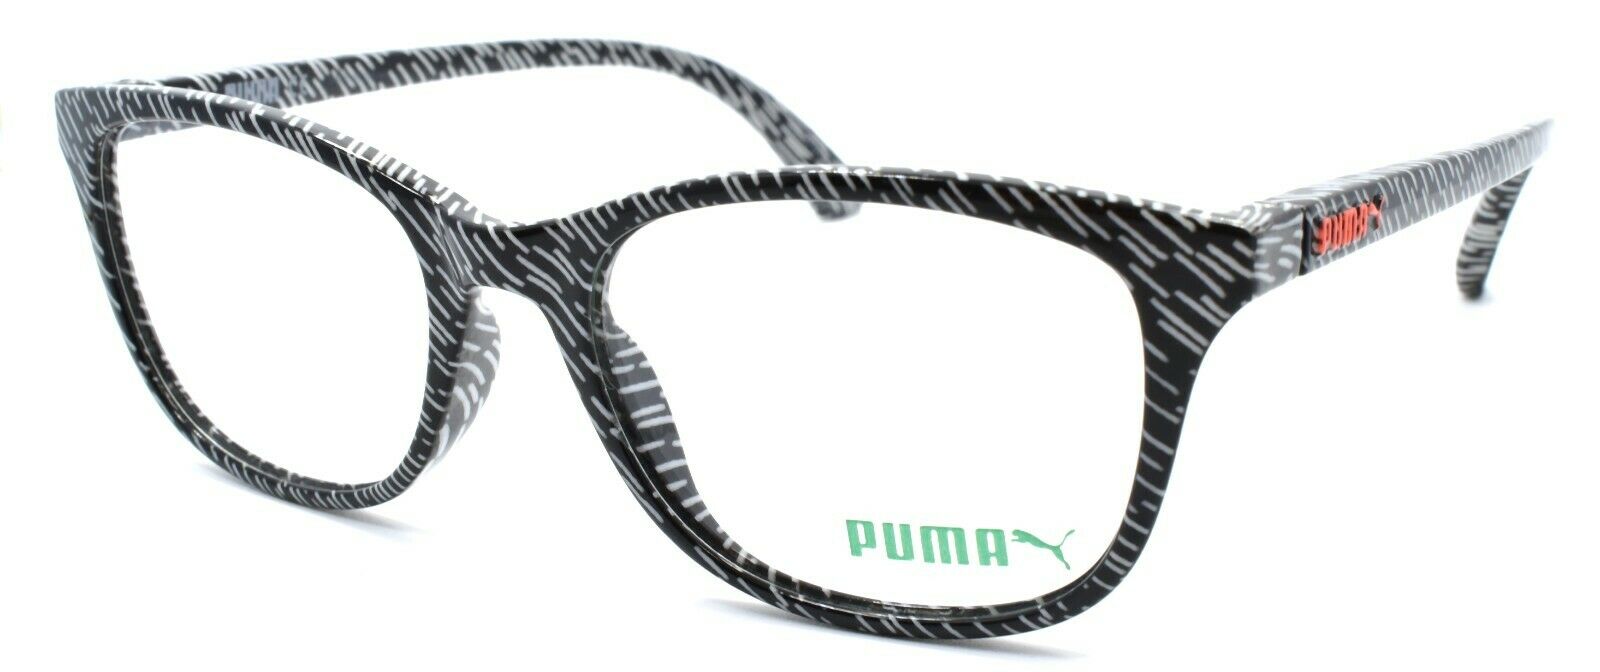 1-PUMA PU0082 001 Women's Eyeglasses Frames 50-17-145 Black / White-889652030067-IKSpecs